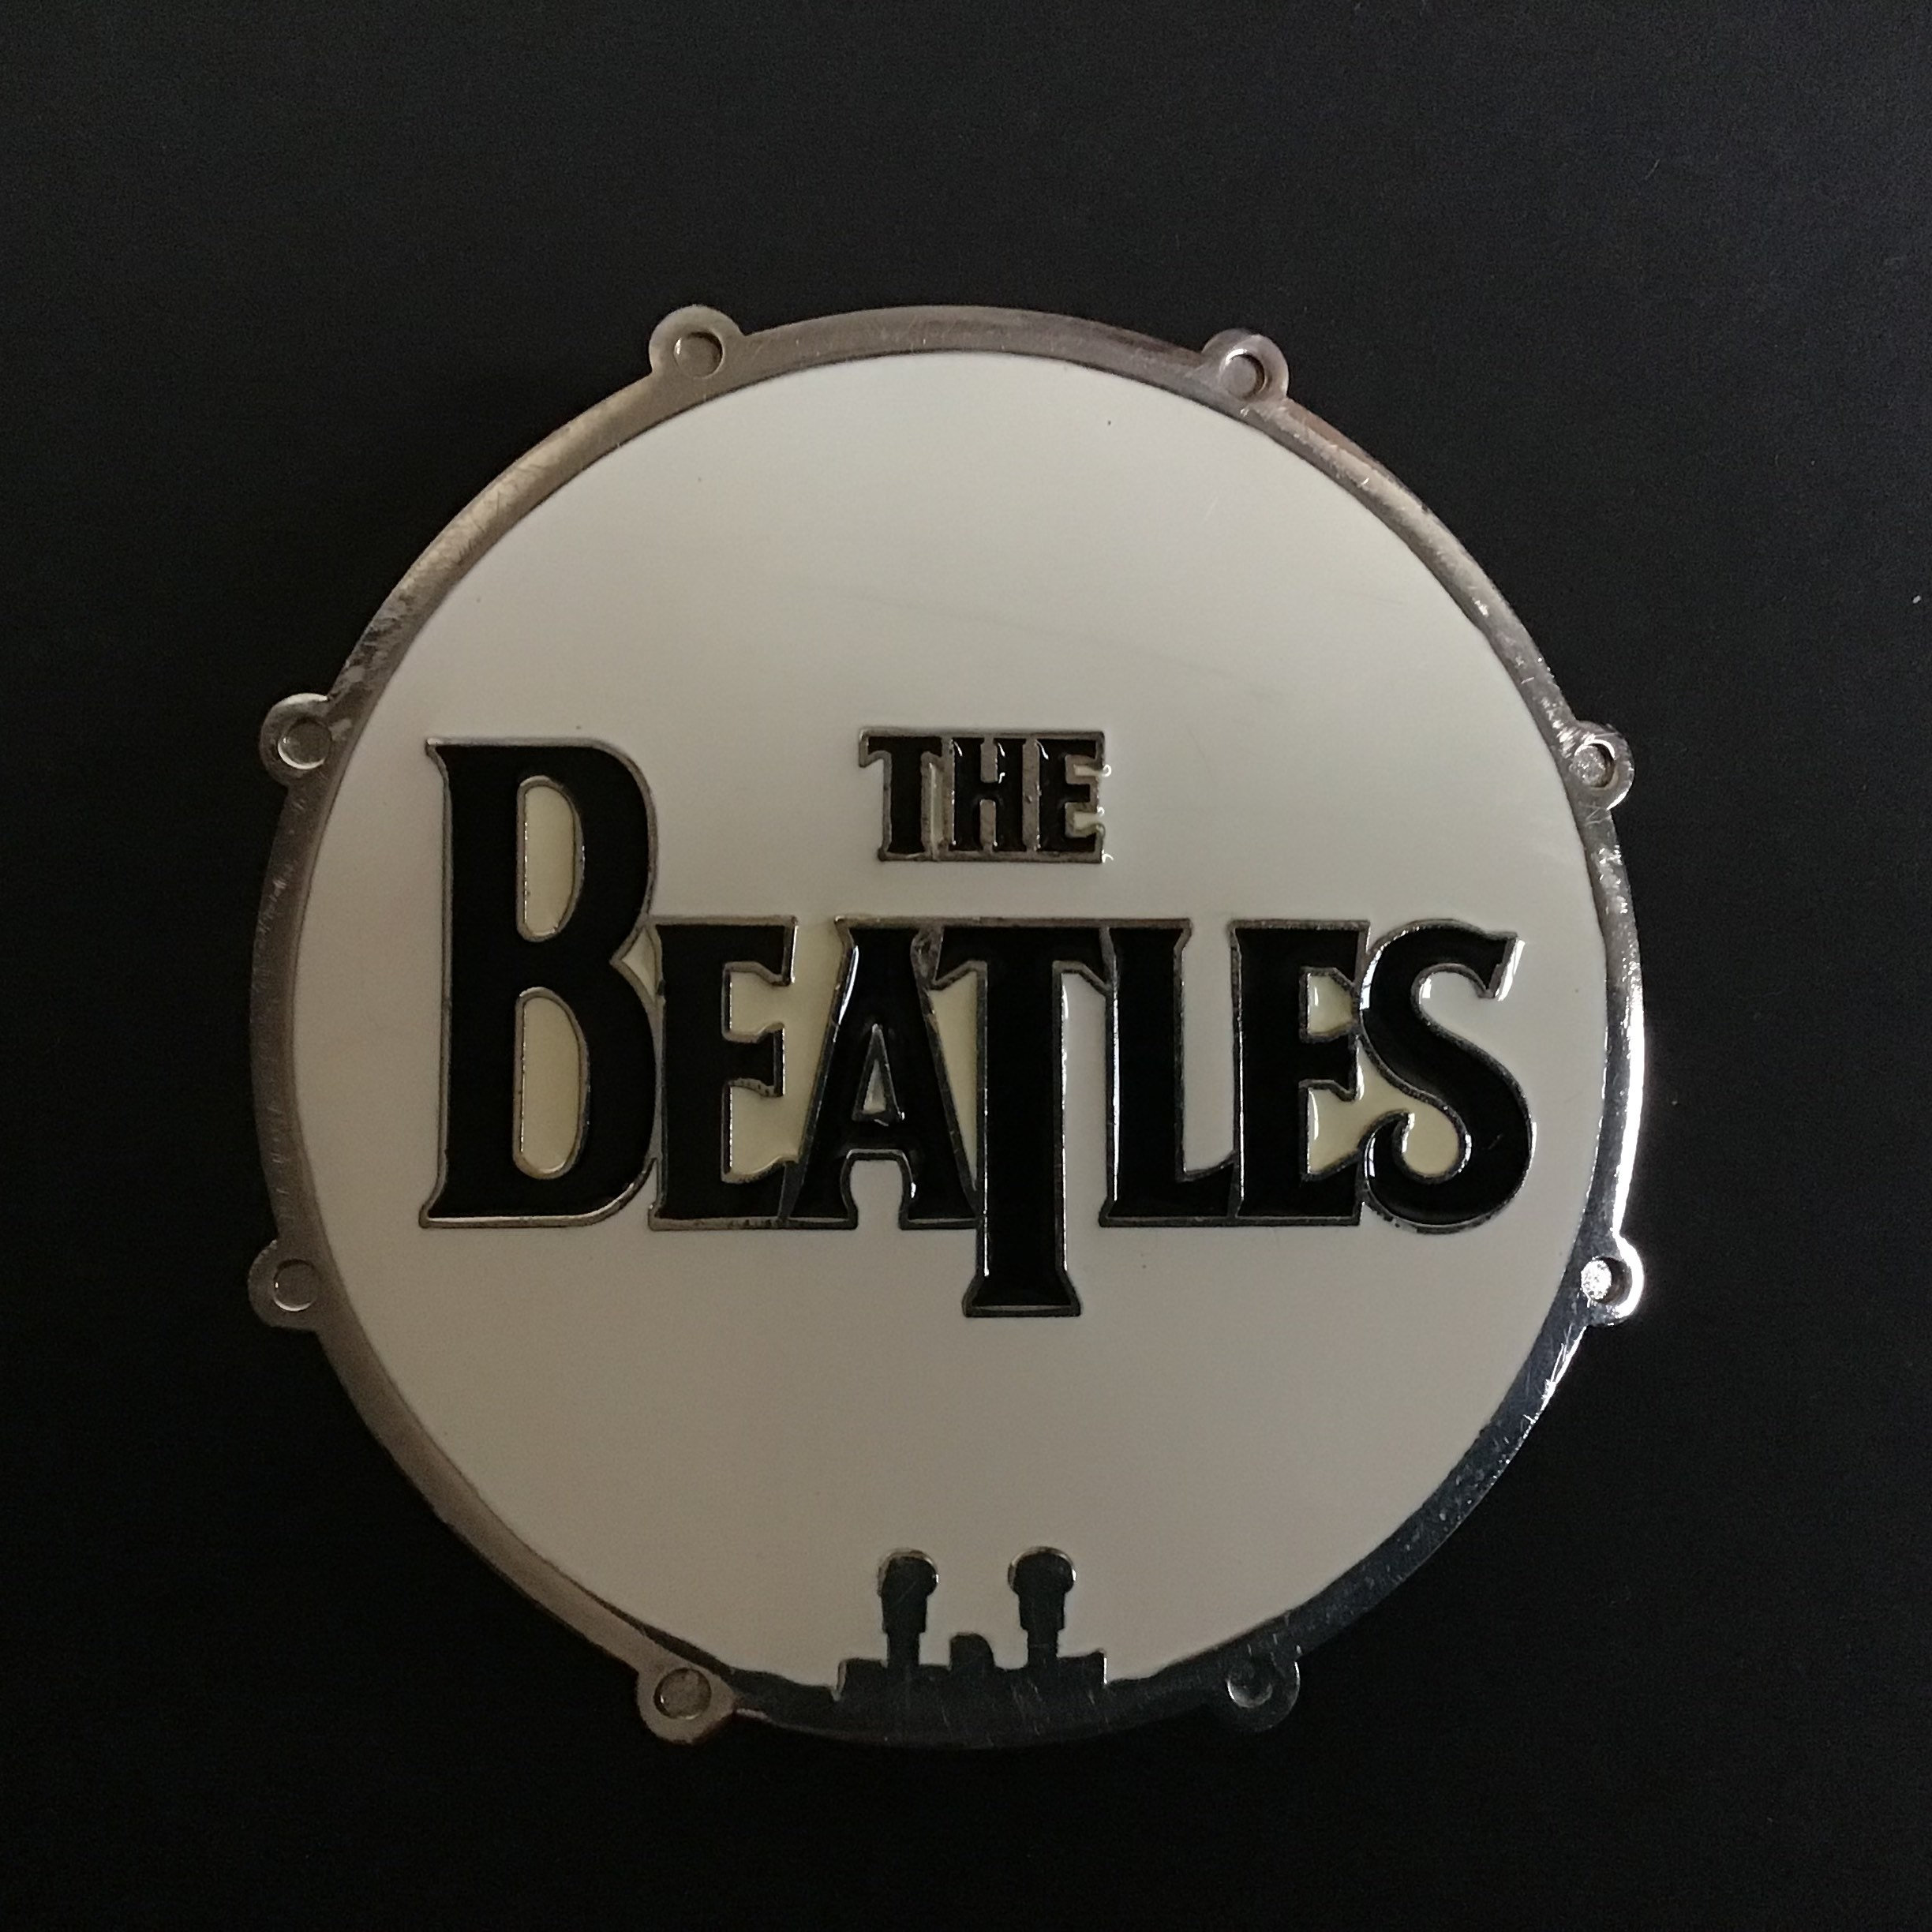 The Beatles Pennyroyal Drum Logo Desk Ornament – The Beatles